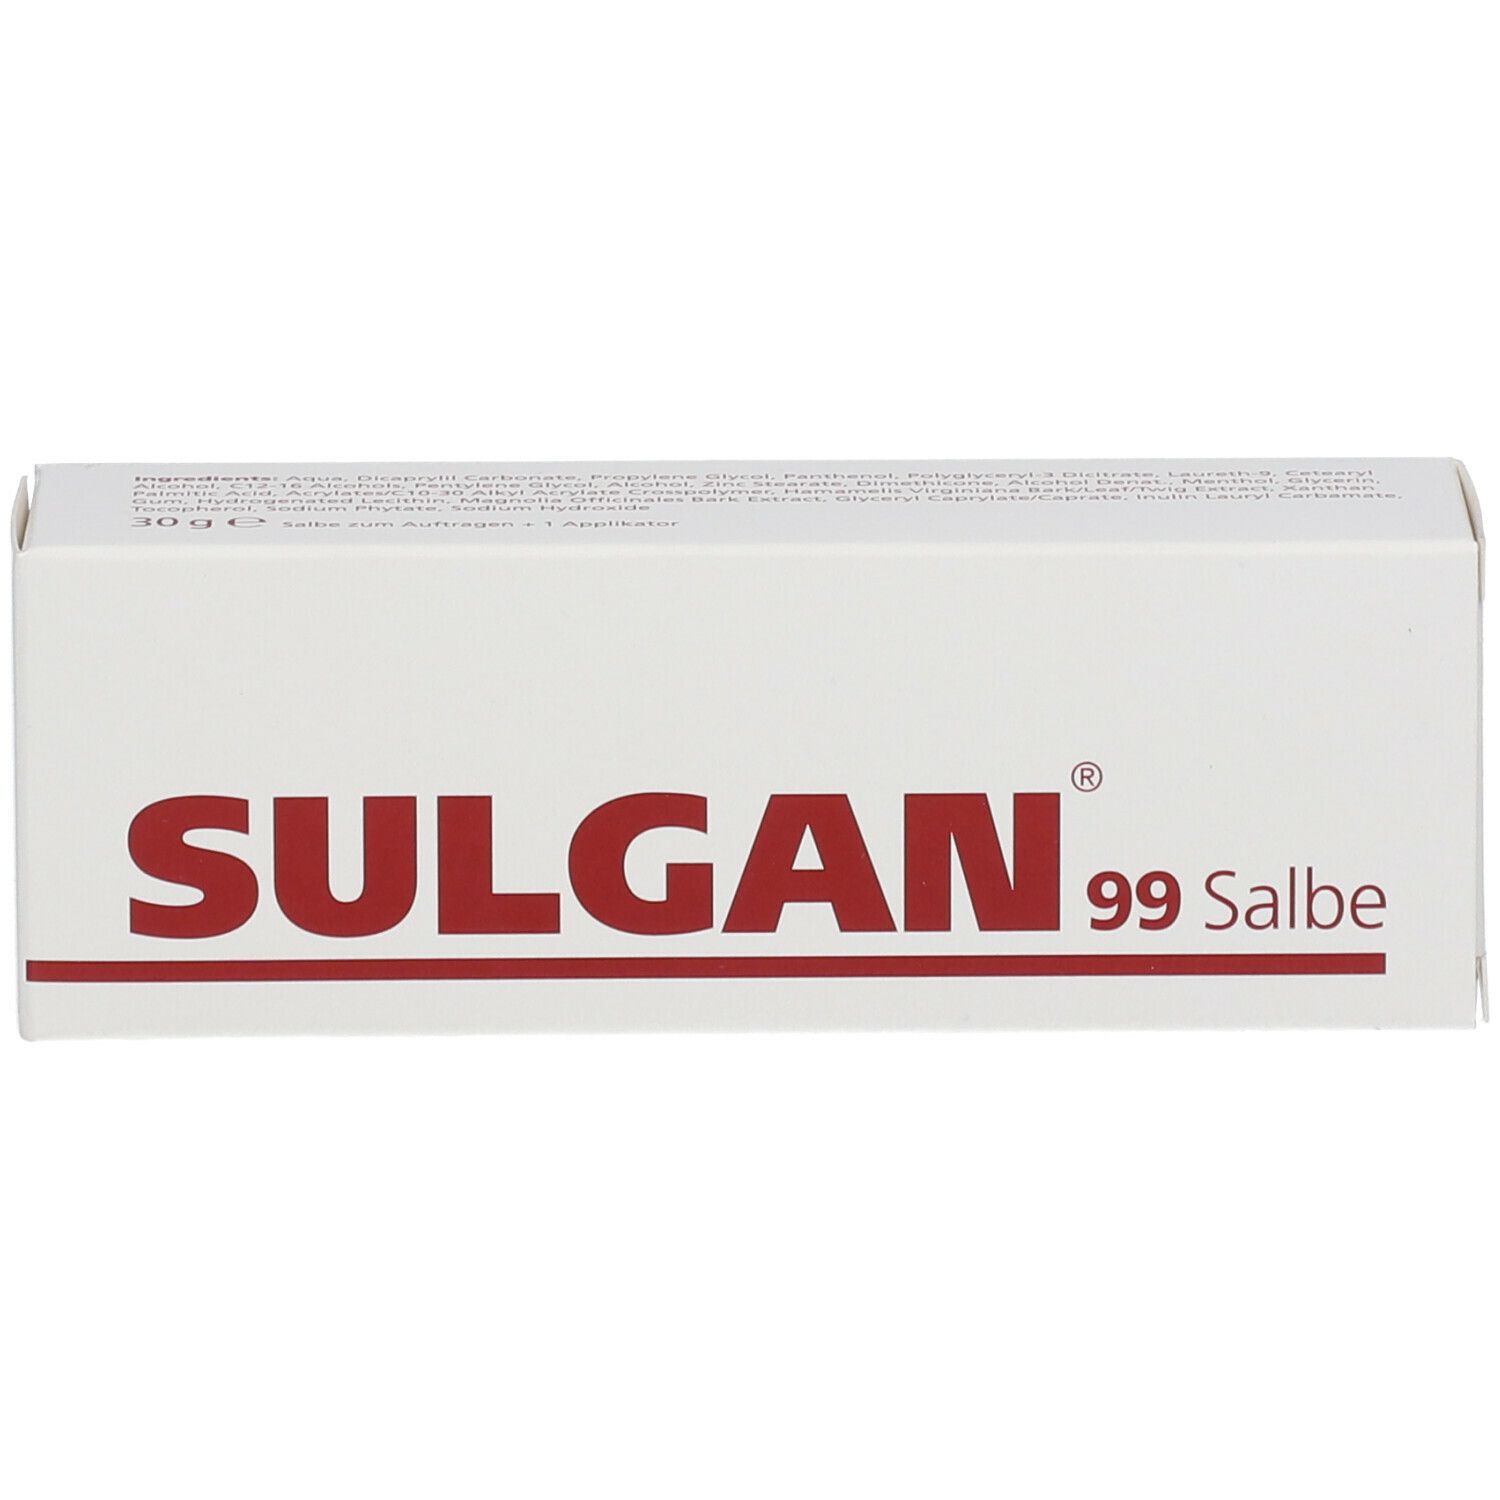 SULGAN® 99